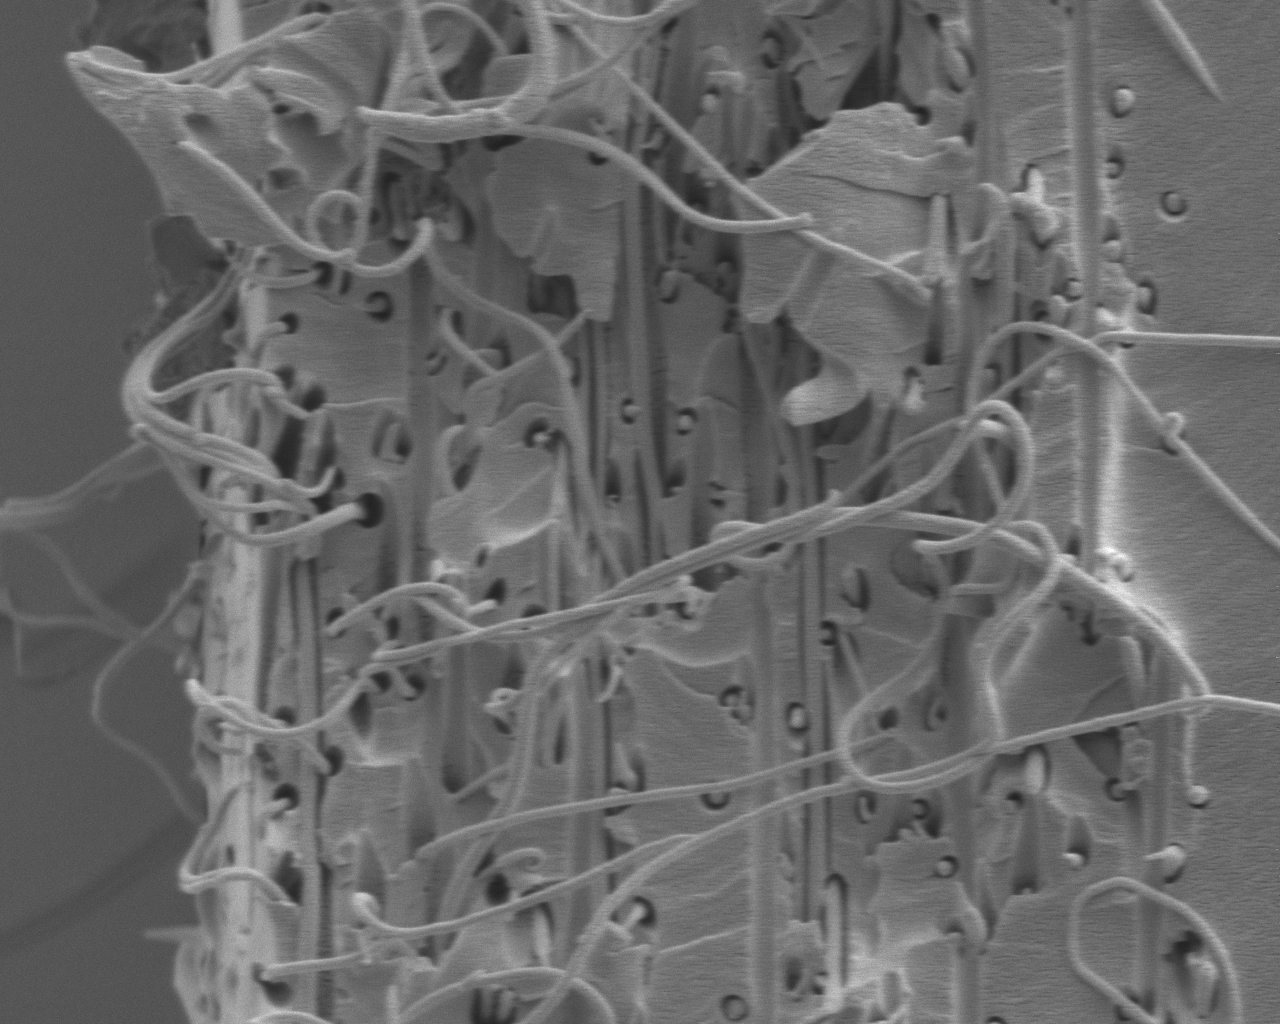 Bioengineered Nanomaterials Diagnose, Treat Nasty New Diseases